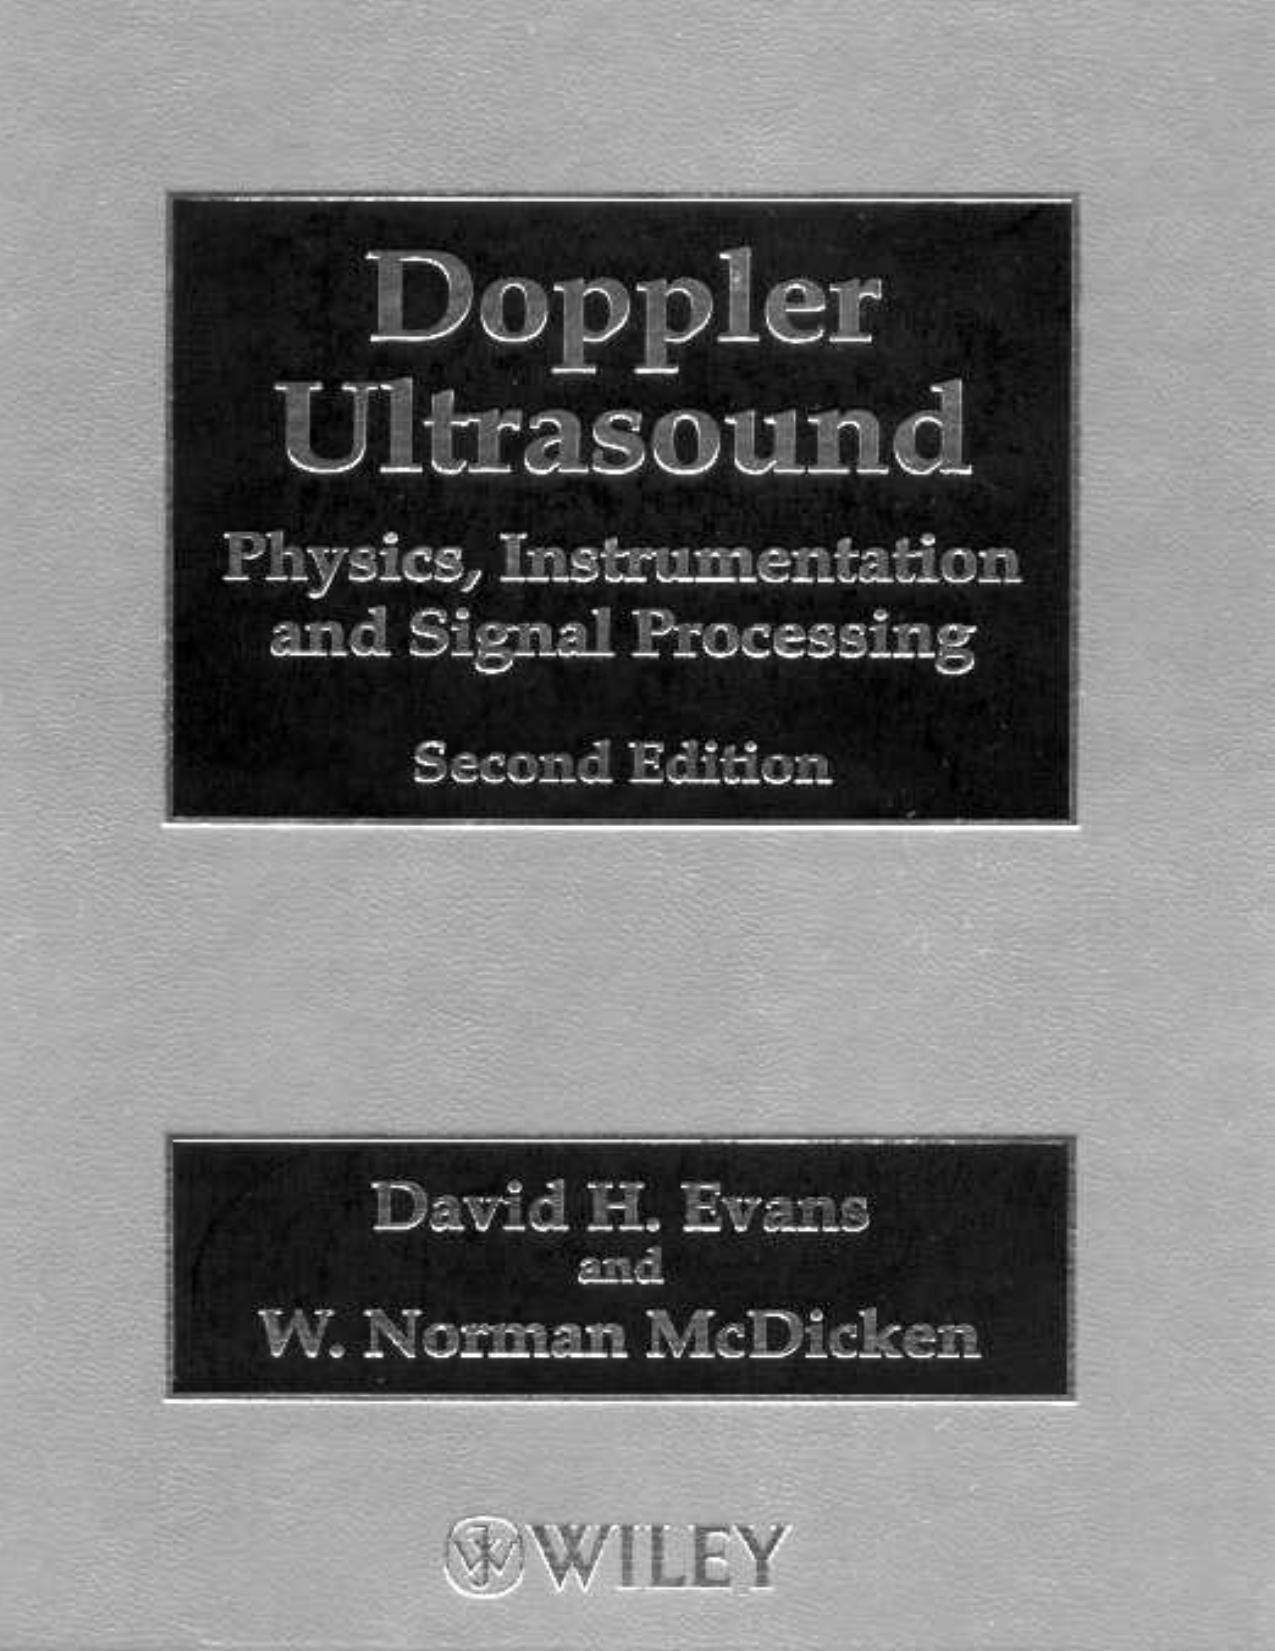 Doppler Ultrasound Physics, Instrumentation and Signal 2nd Edition.jpg